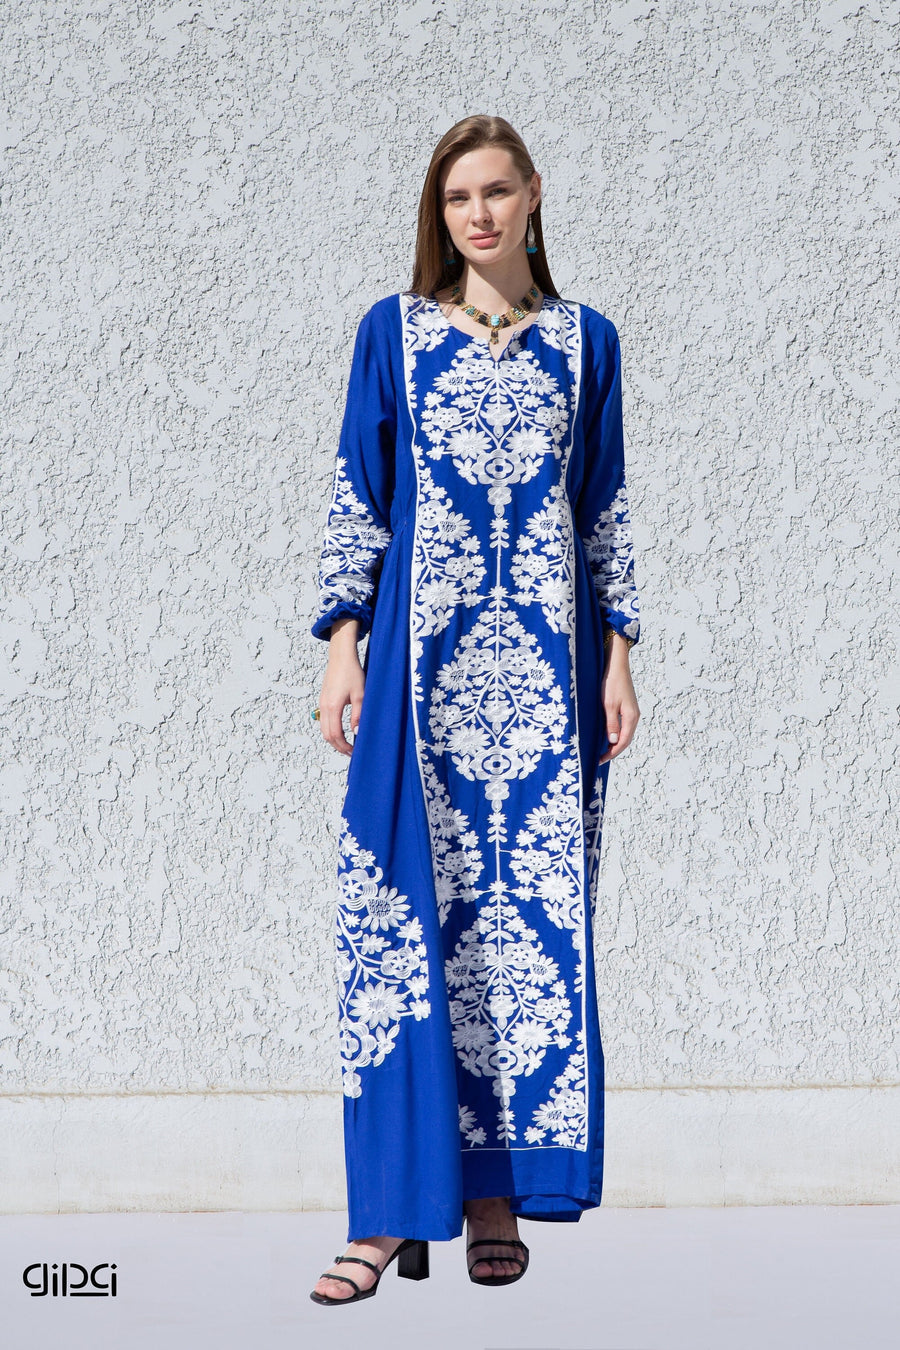 Elegant Royal blue embroidered kaftan dress, Cotton caftan women, Long sleeve caftan, Chic embroidered caftan, High quality Egyptian cotton